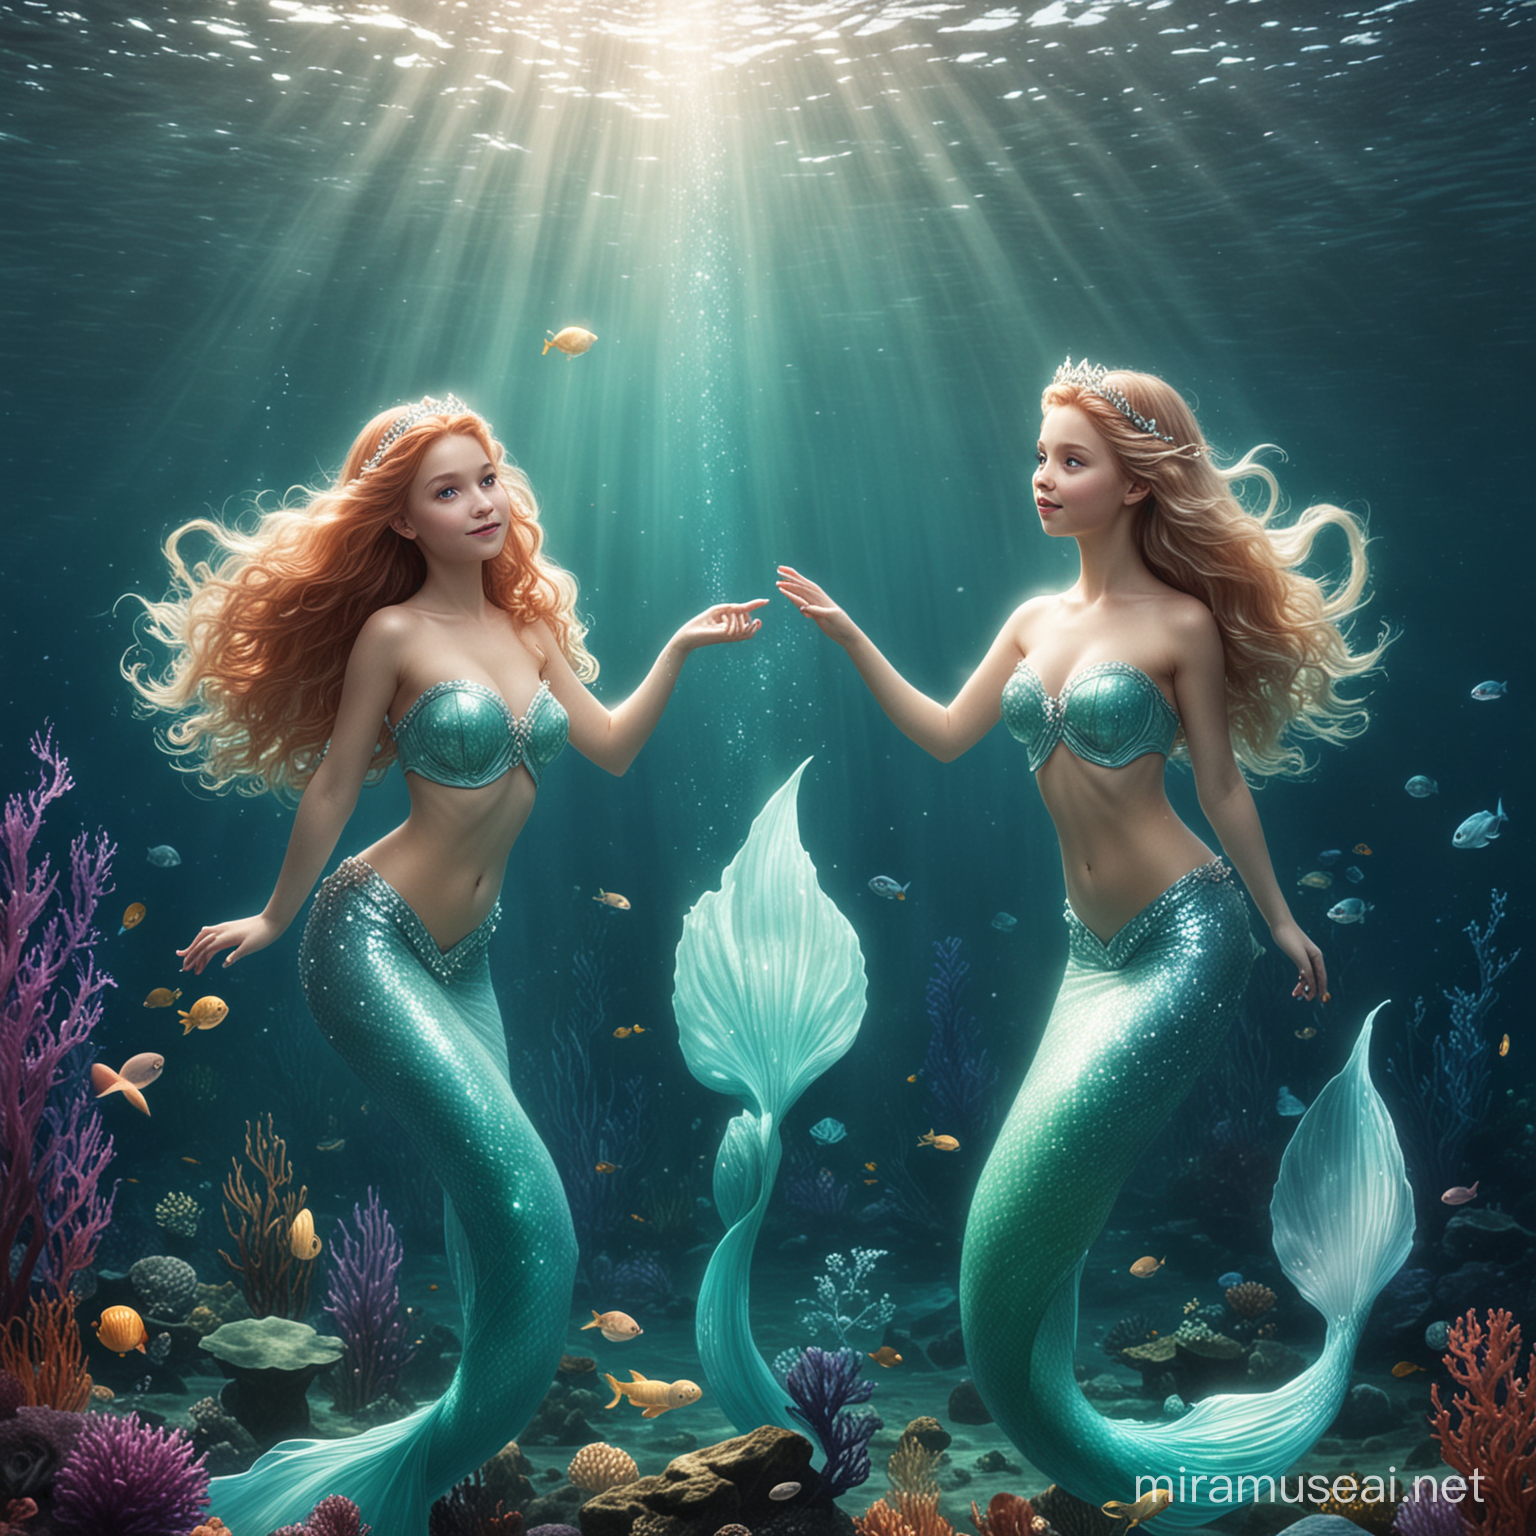 princess ellia and bibby as mermaids